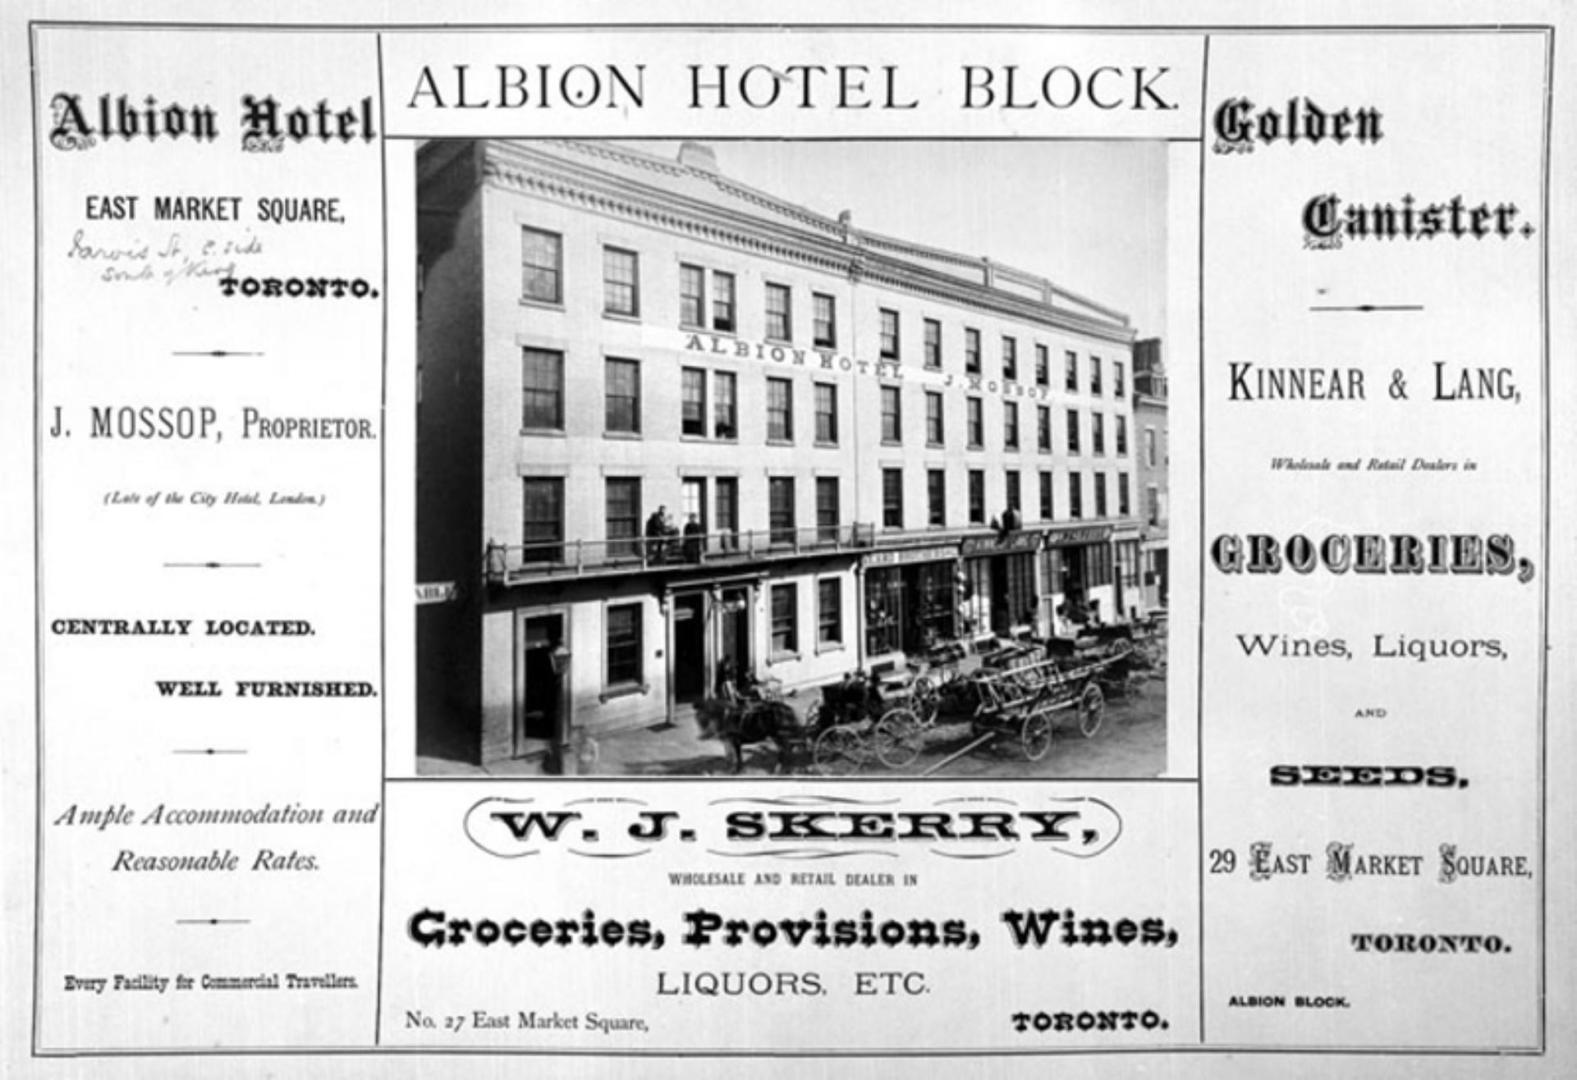 Albion Hotel block, East Market Square